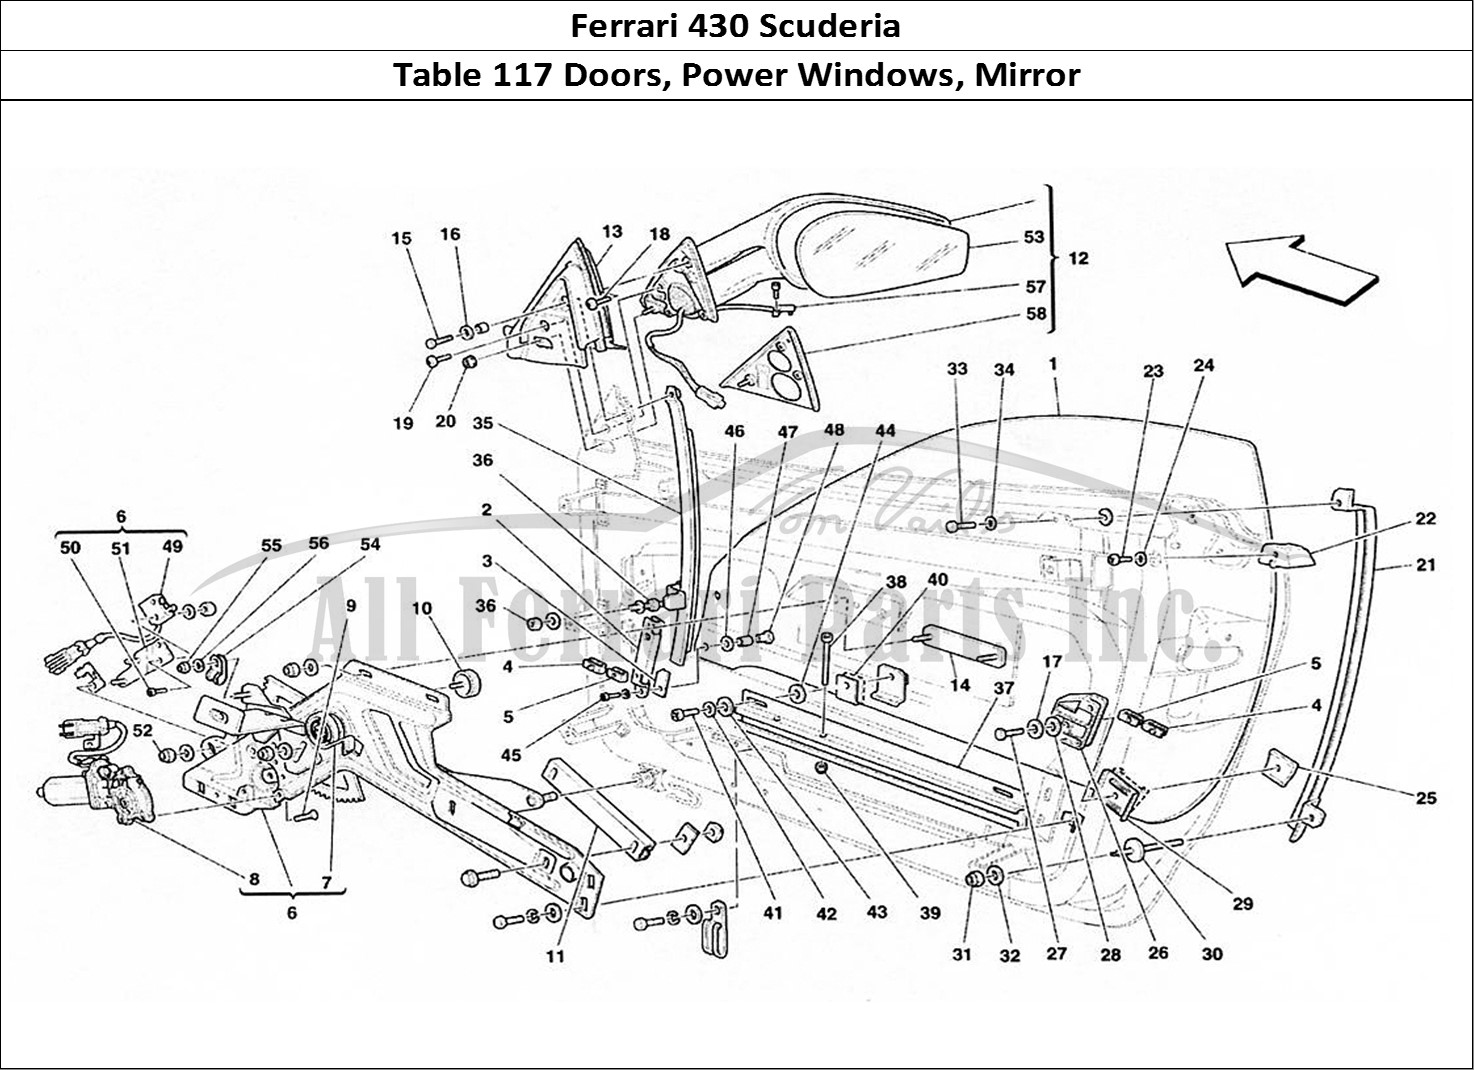 Ferrari Parts Ferrari 430 Scuderia Page 117 Doors - Power Window and